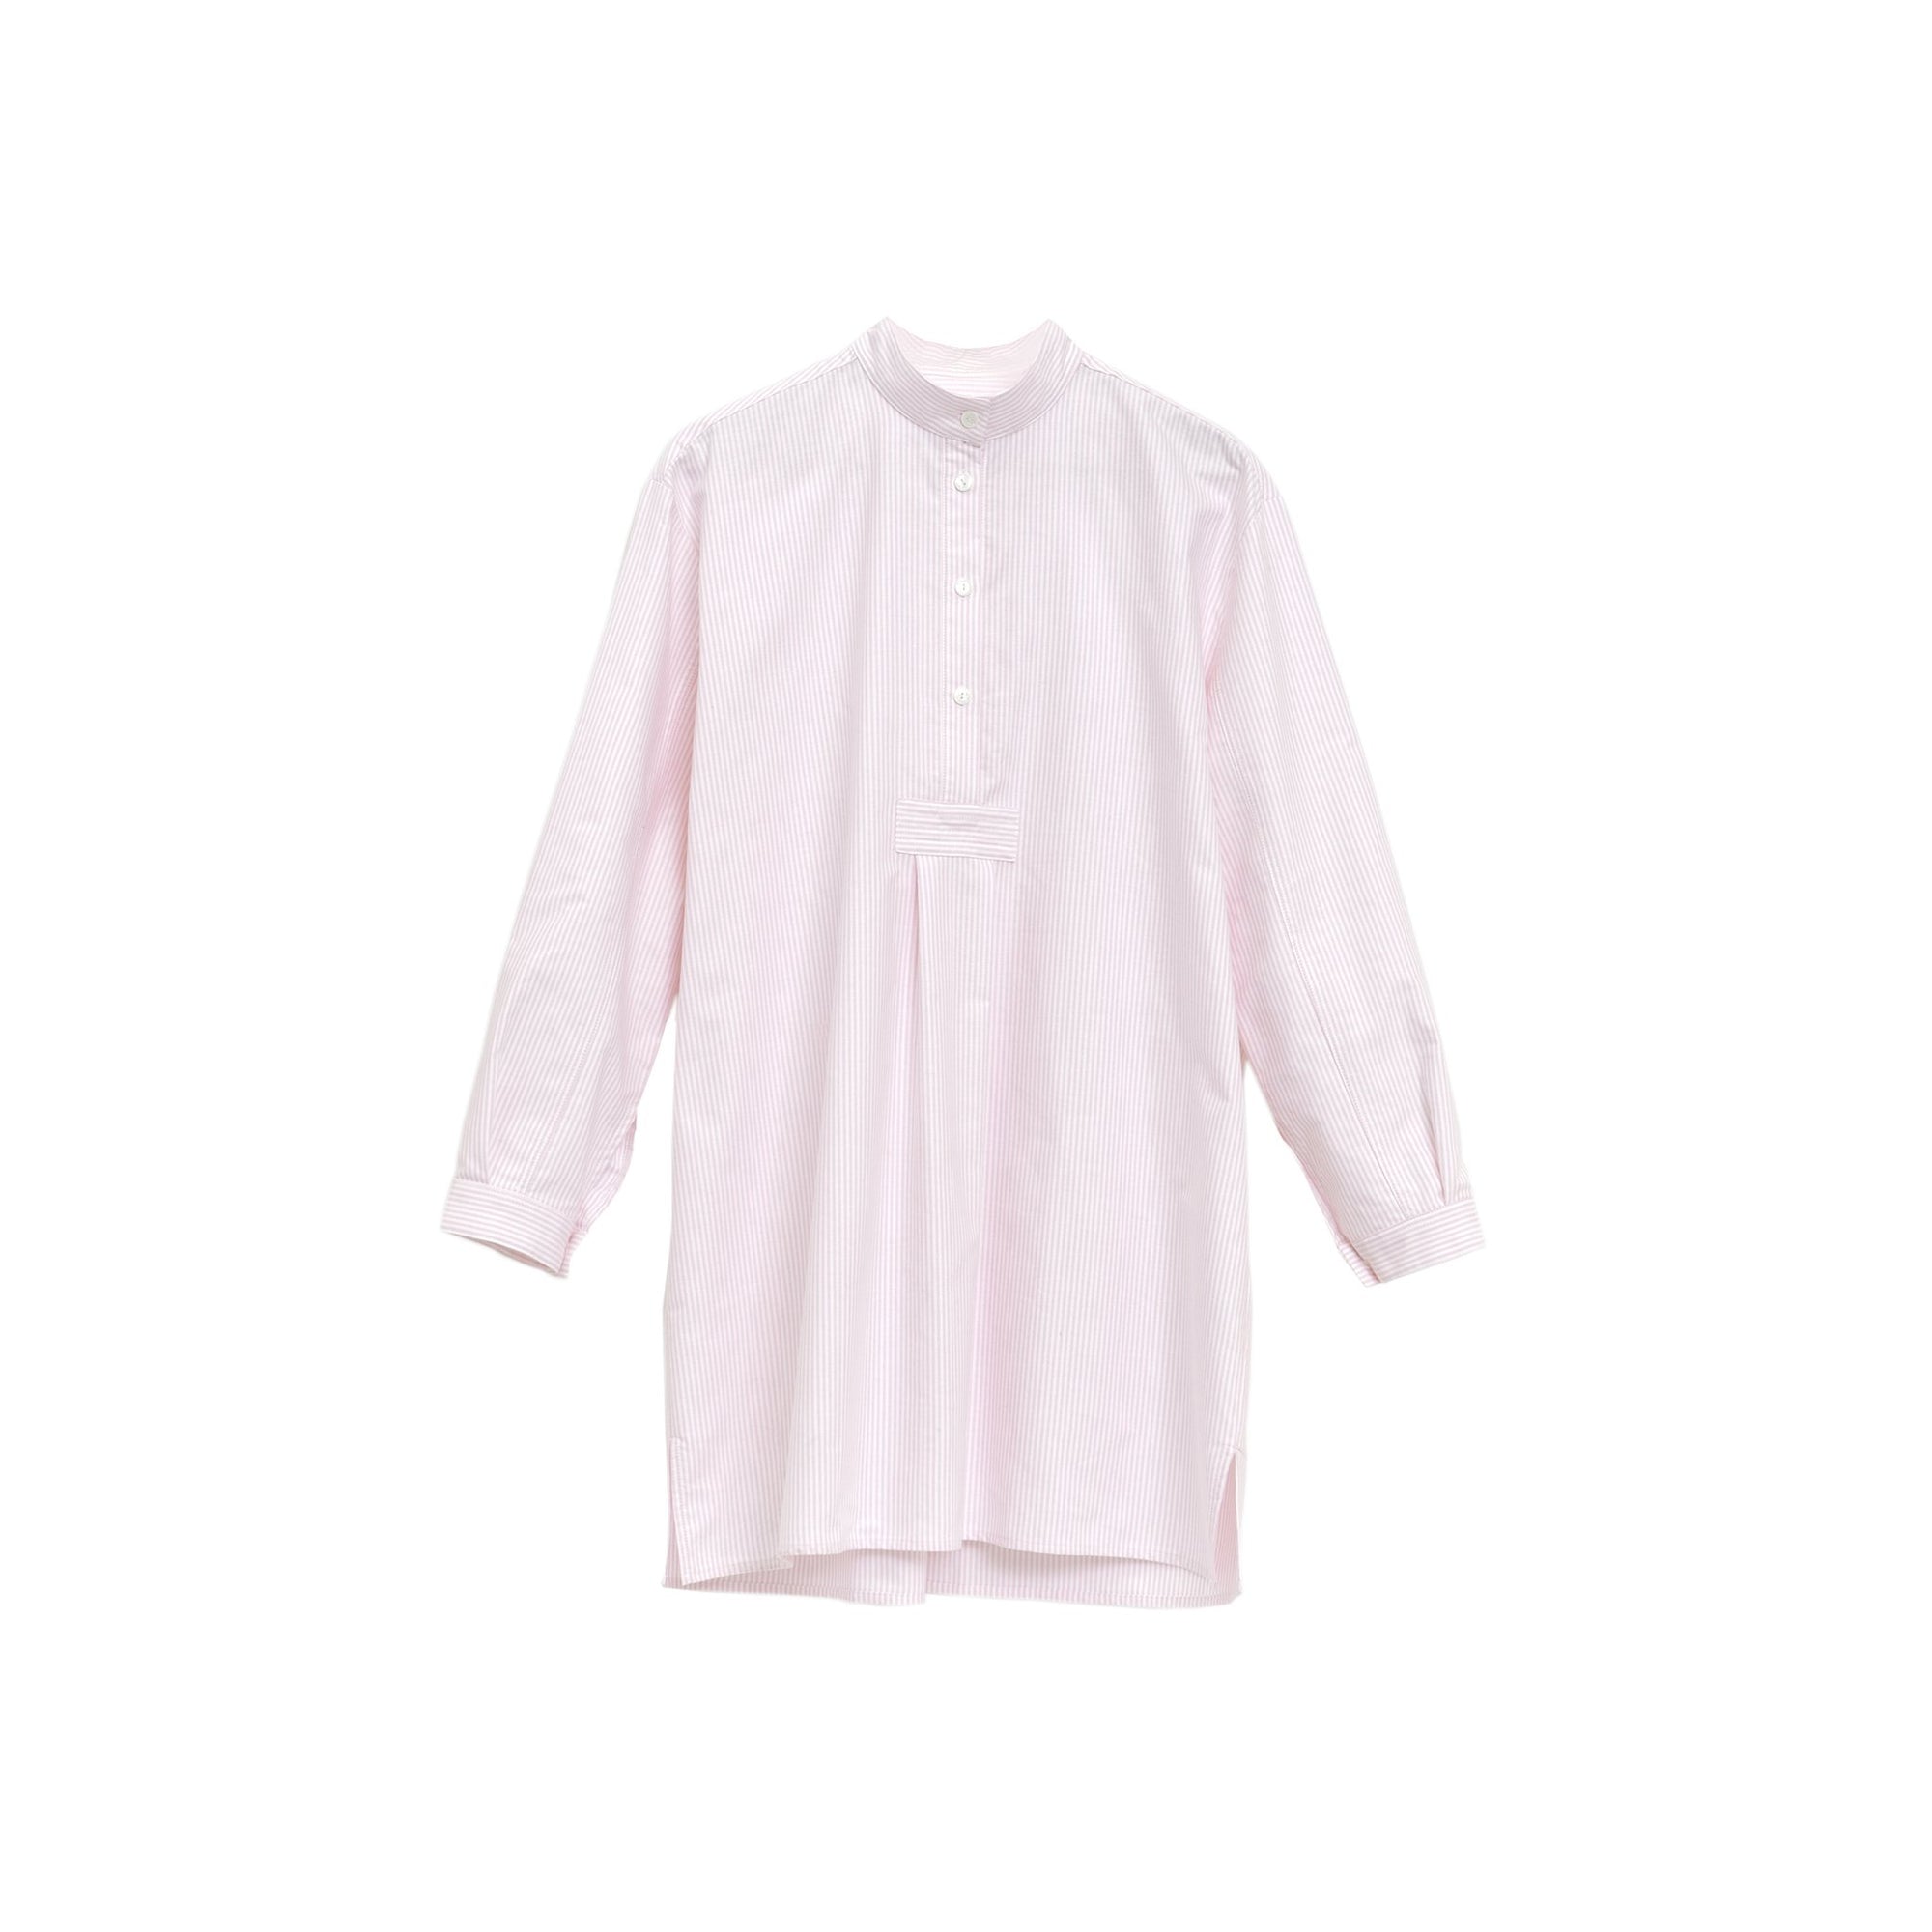 Short Sleep Shirt in Pink Oxford Stripe